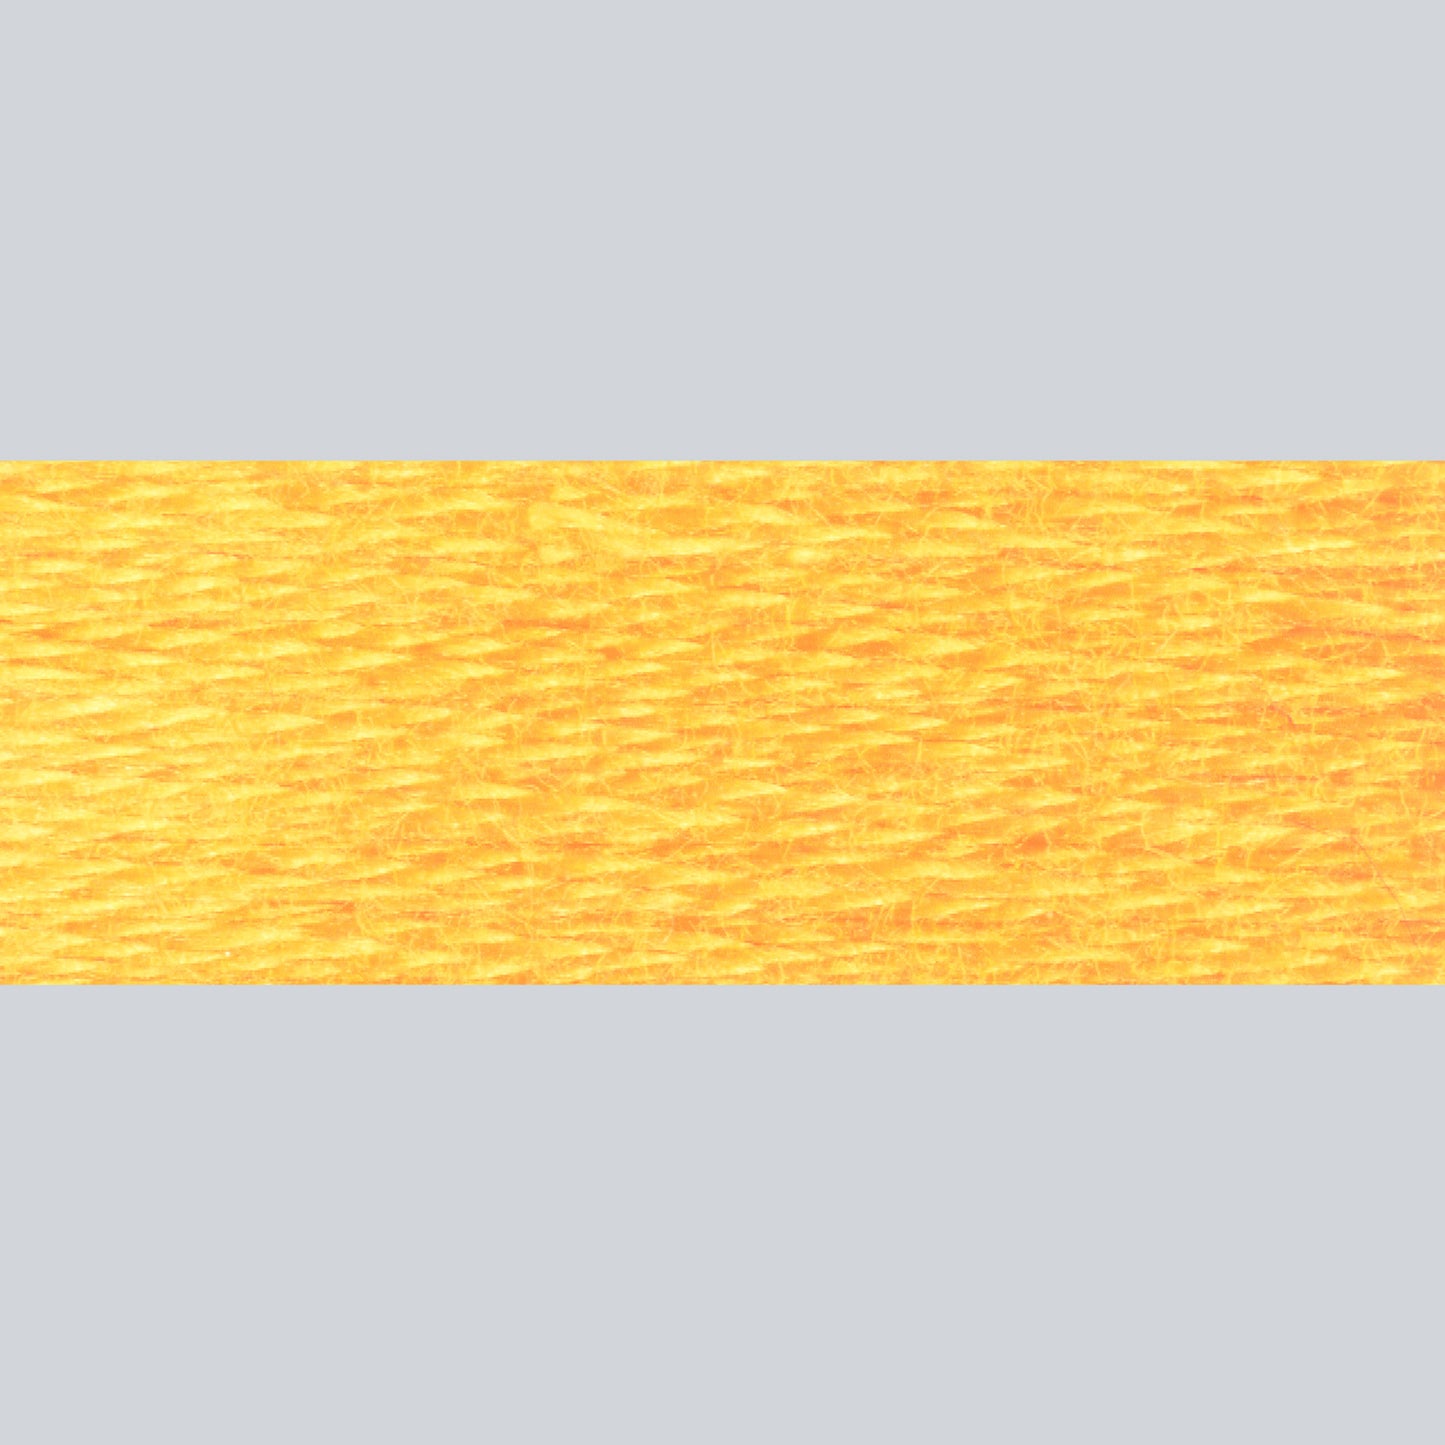 DMC Embroidery Floss - 743 Medium Yellow Alternative View #1